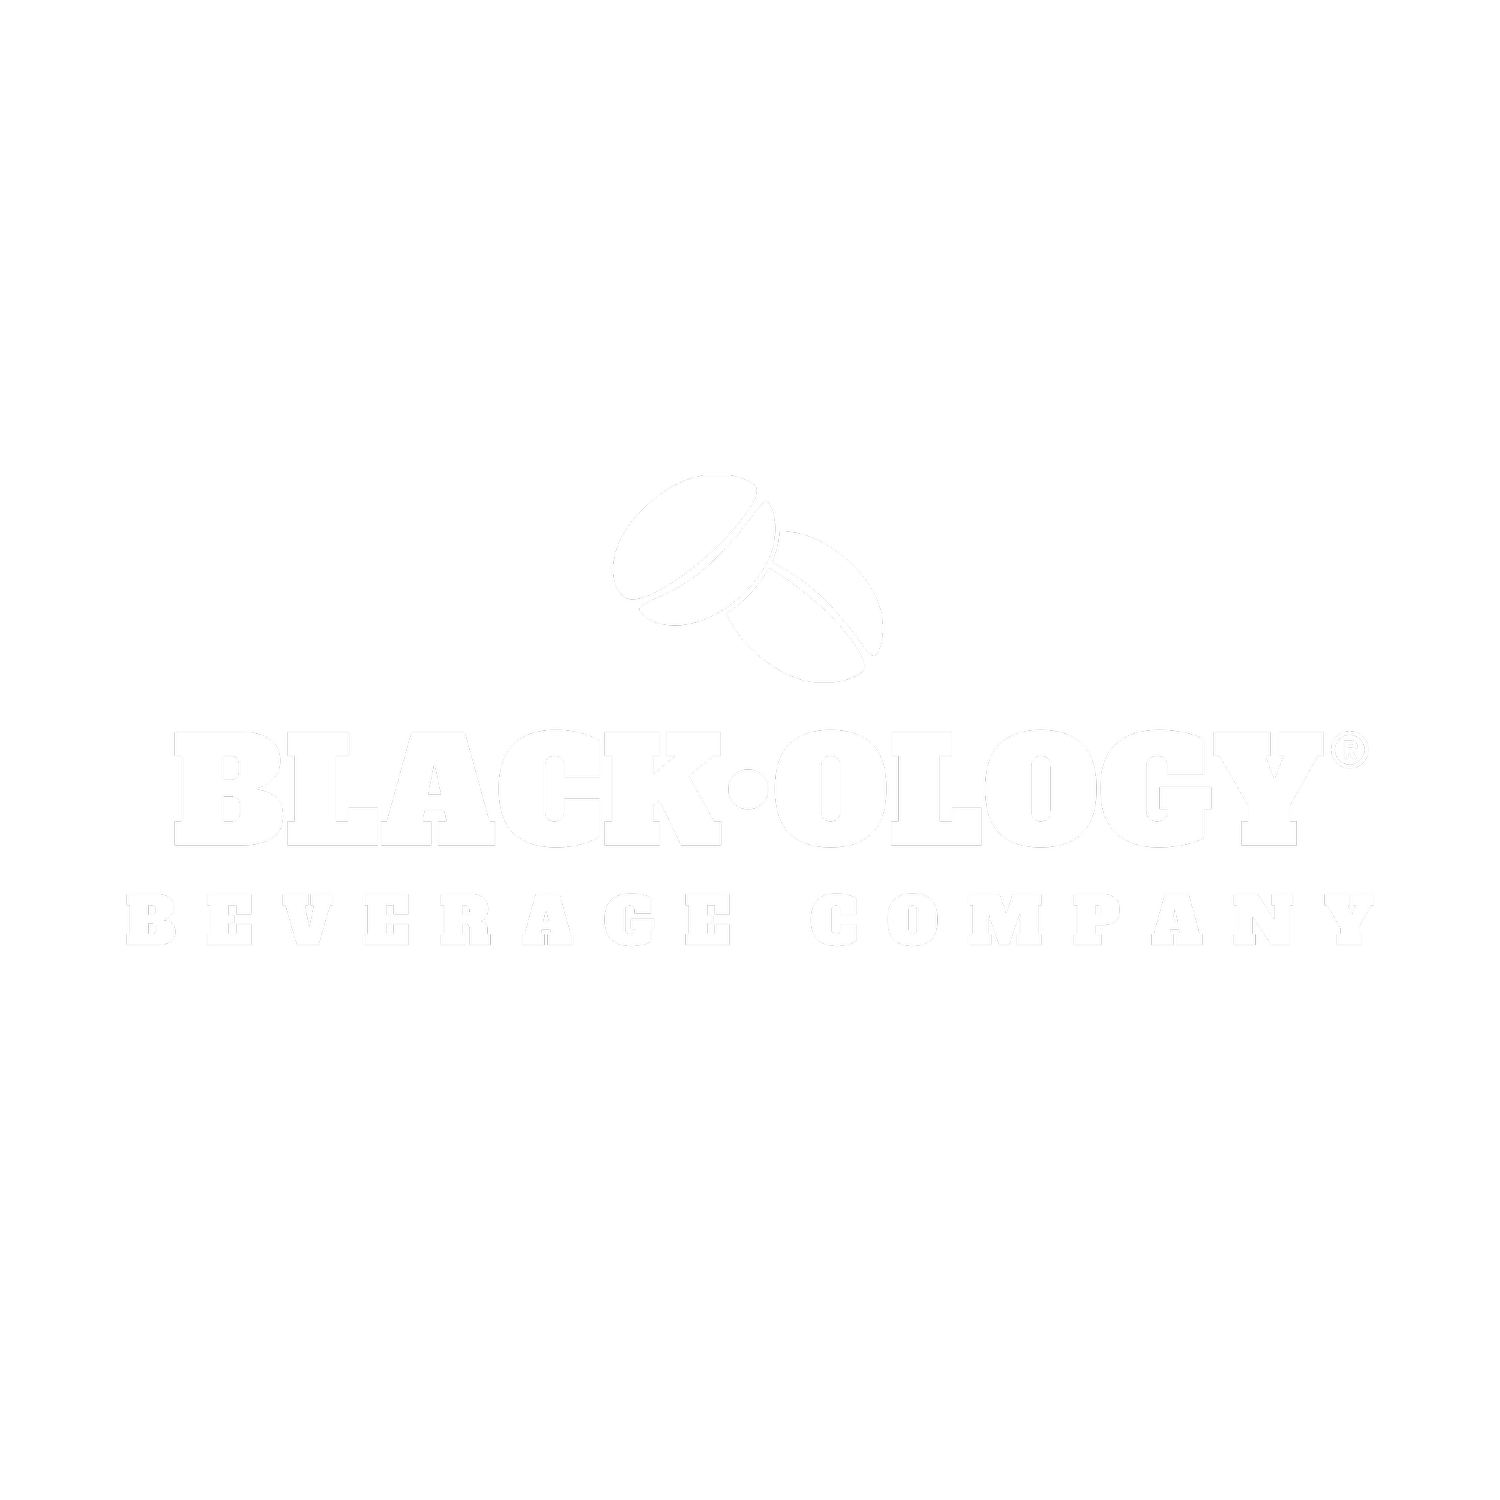 Black•ology Coffee Company